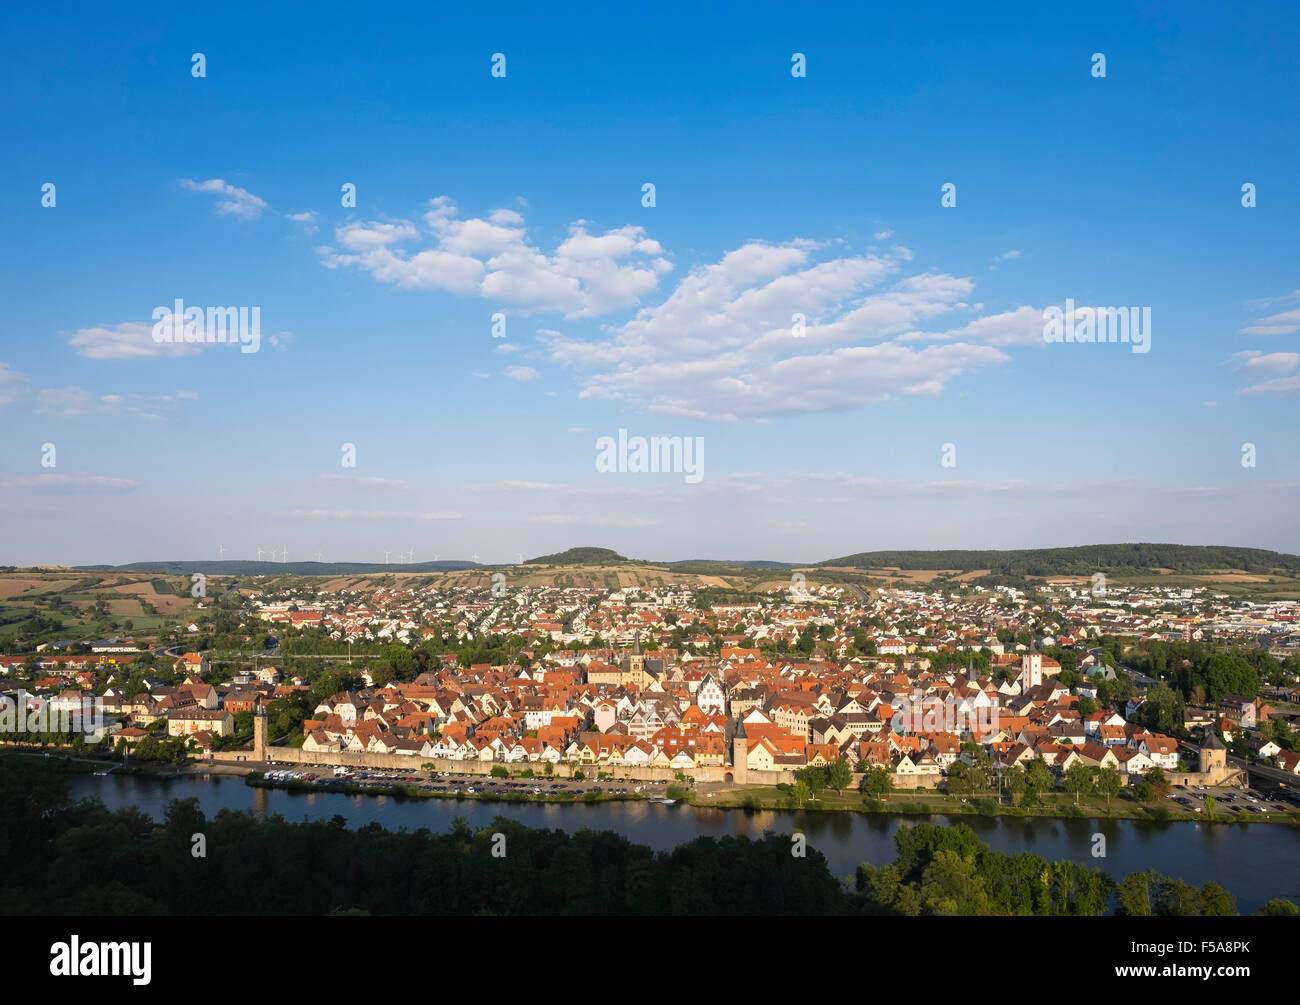 Main River and historic centre, Karlstadt, Lower Franconia, Franconia, Bavaria, Germany Stock Photo